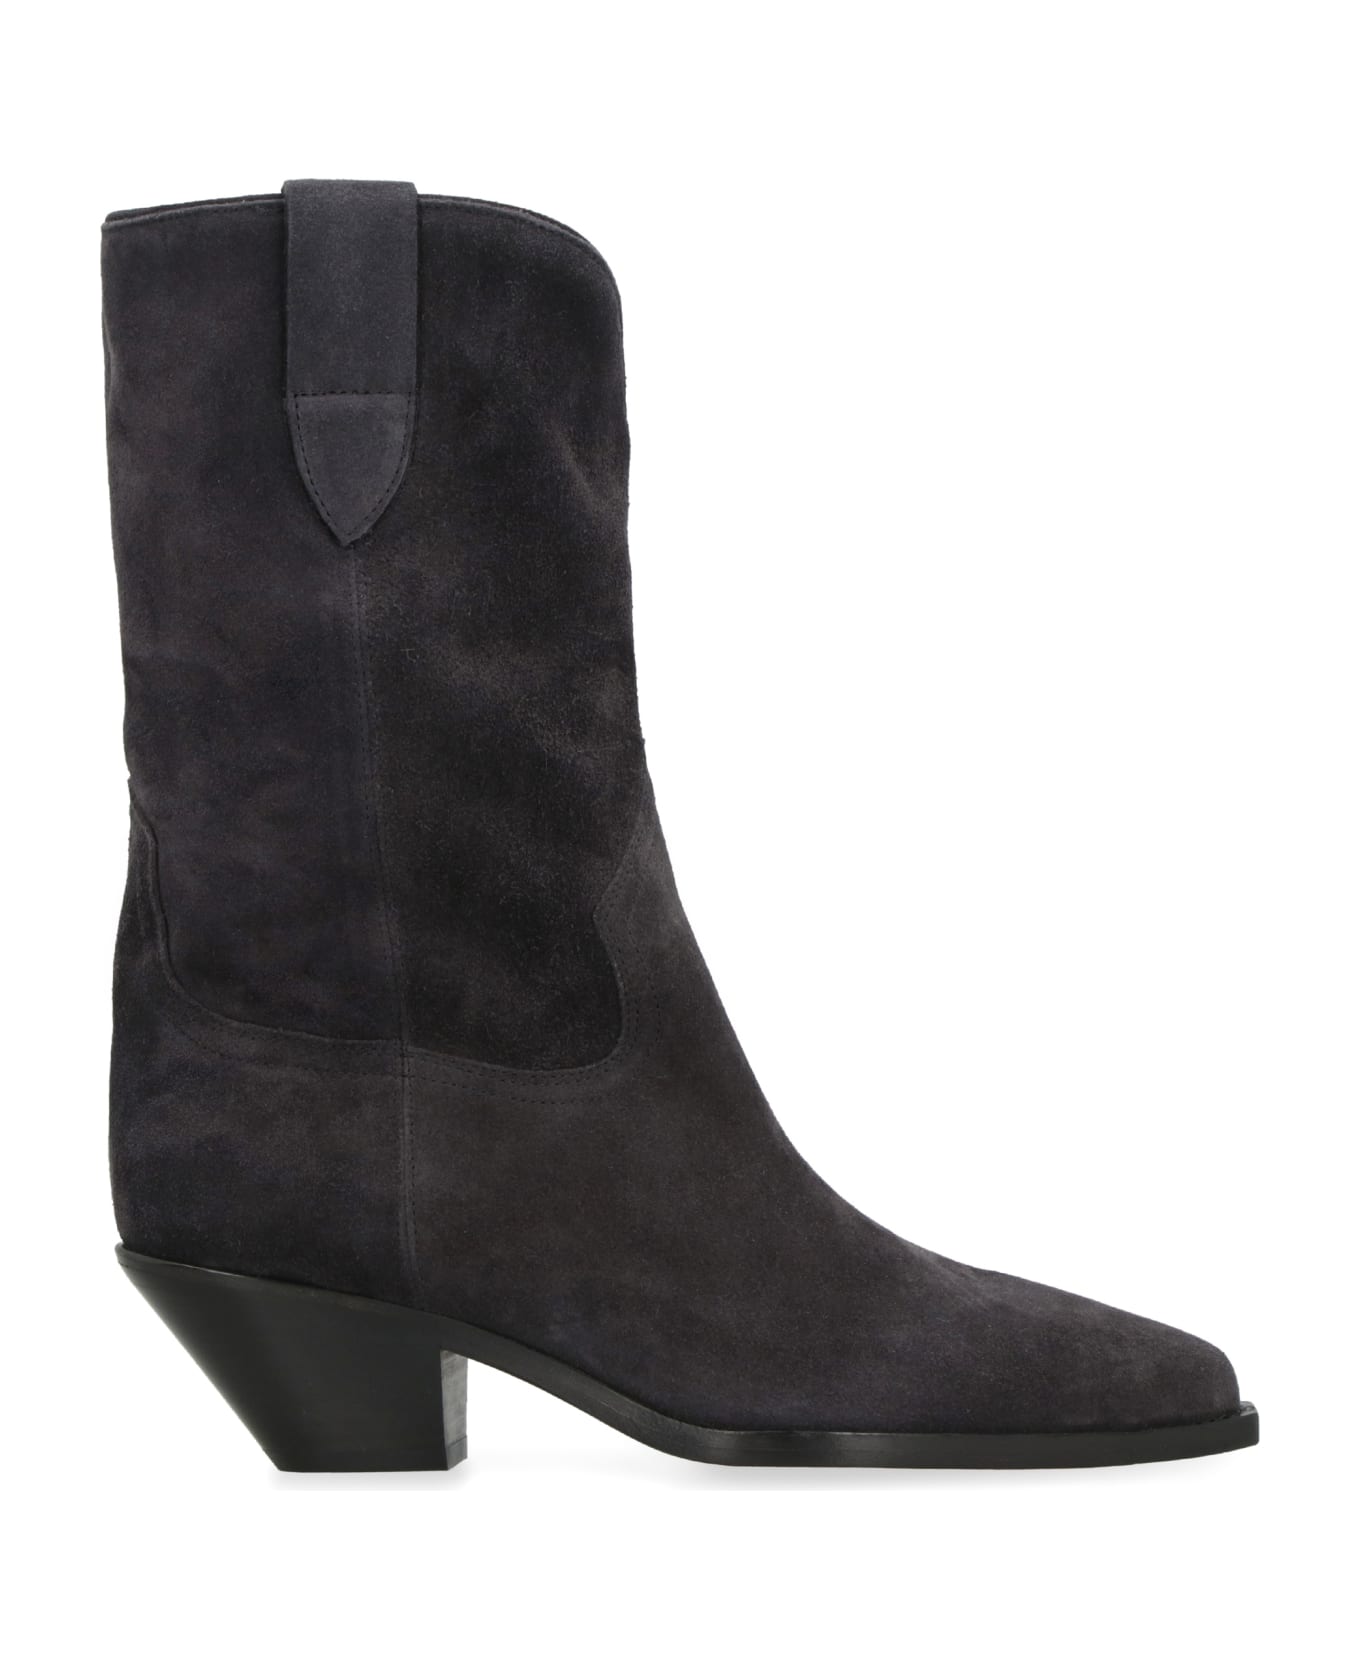 Isabel Marant Dahope Cowboy Boots - black ブーツ